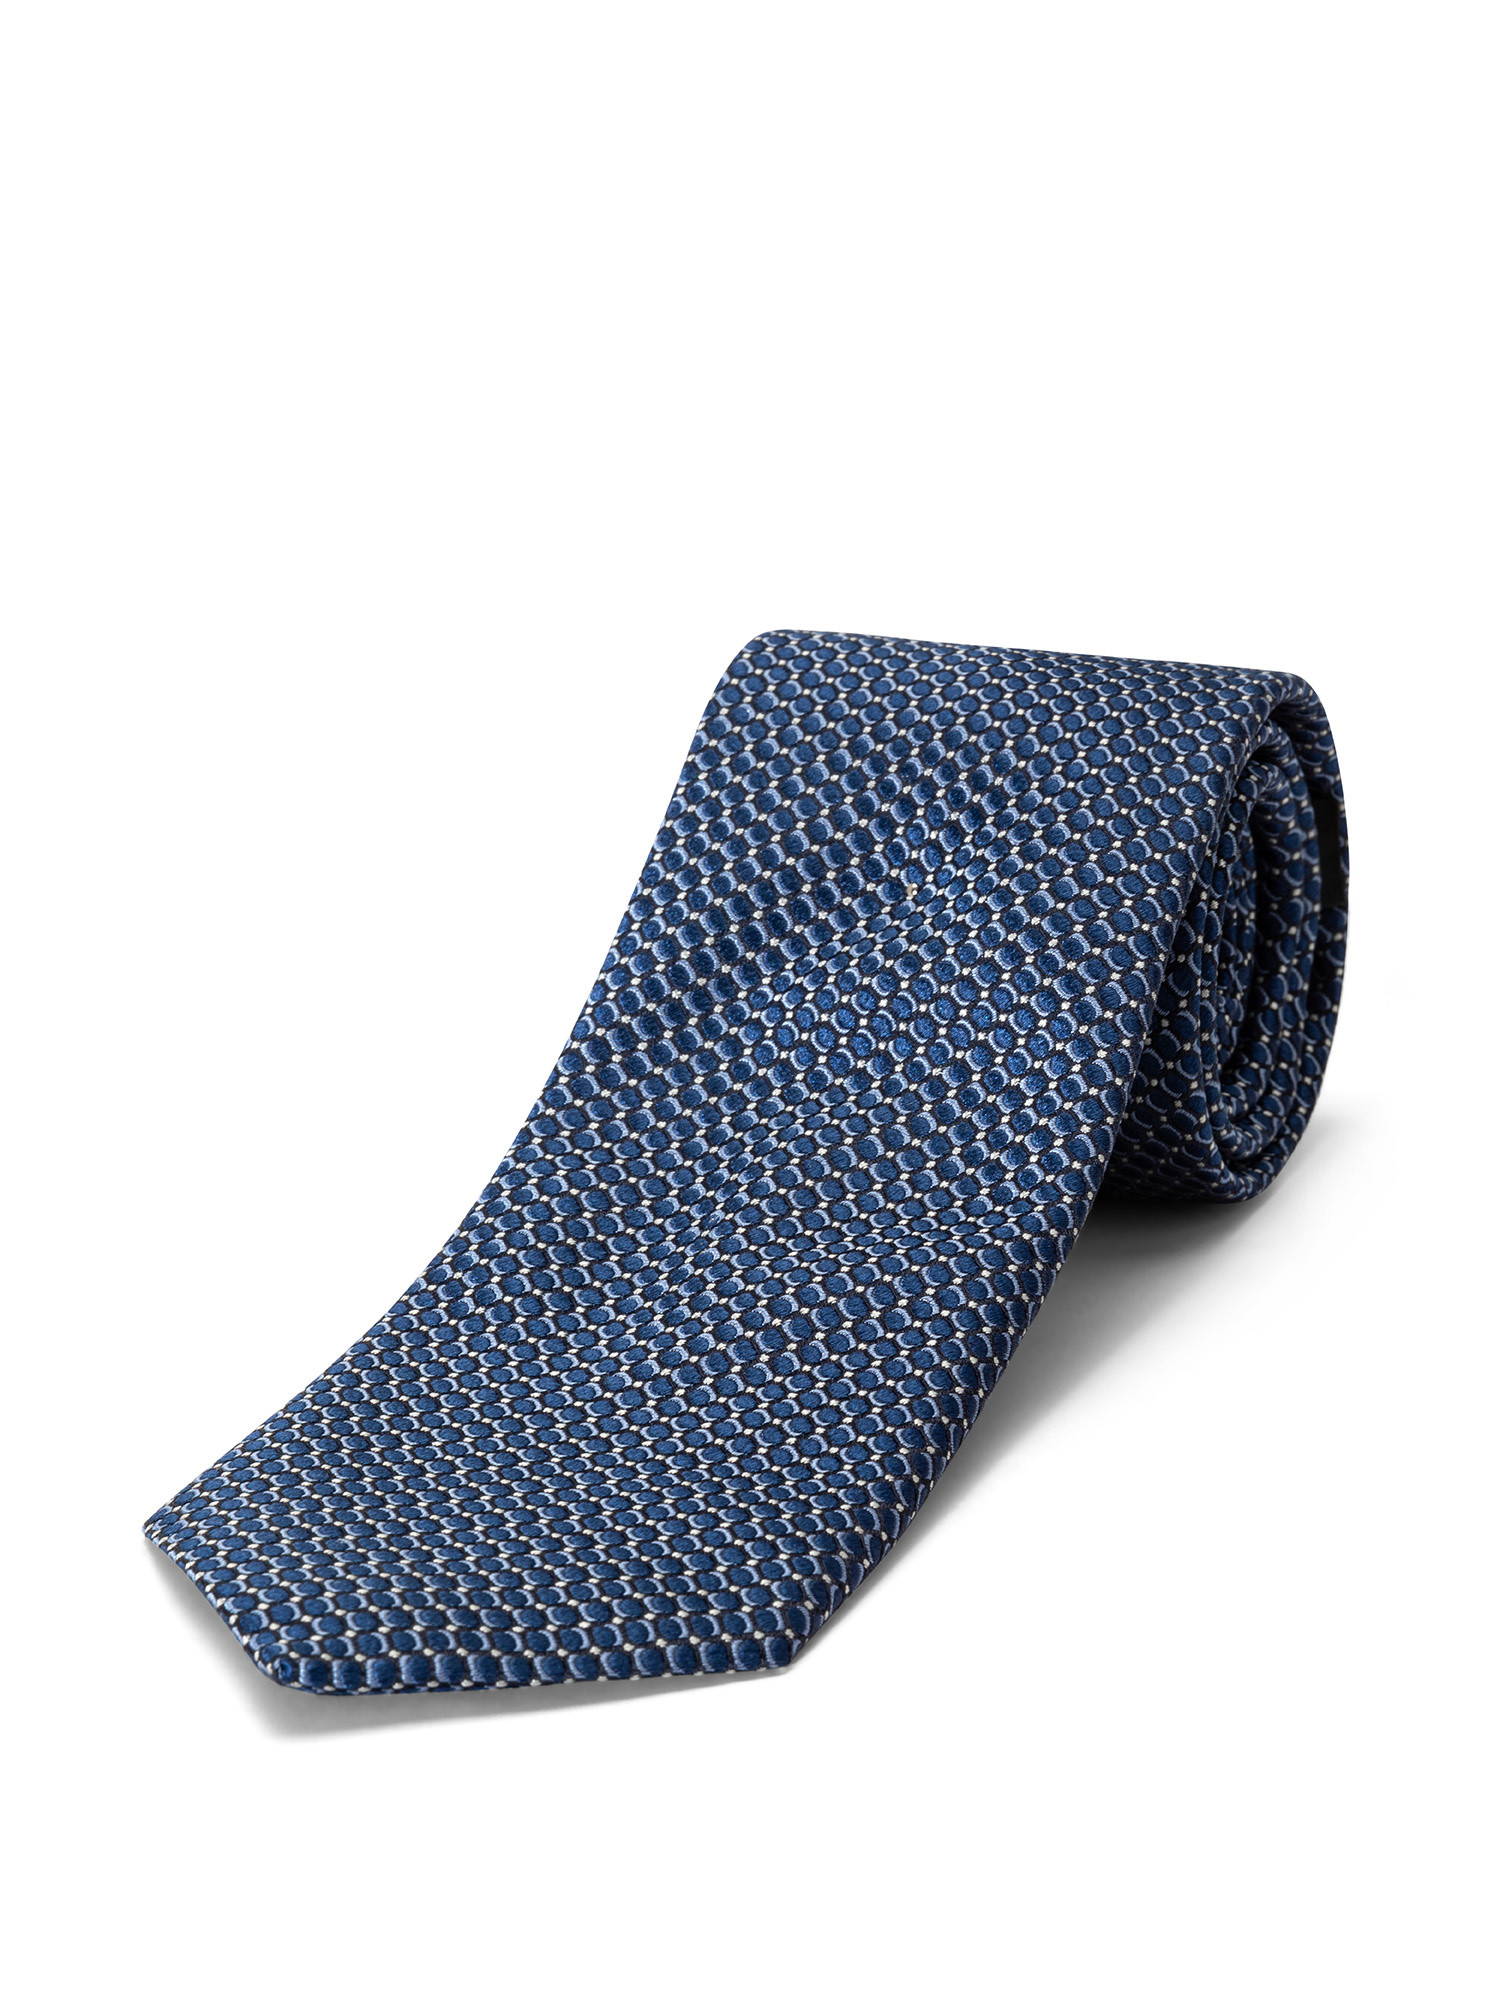 Luca D'Altieri - Classic patterned silk tie, Light Blue, large image number 0